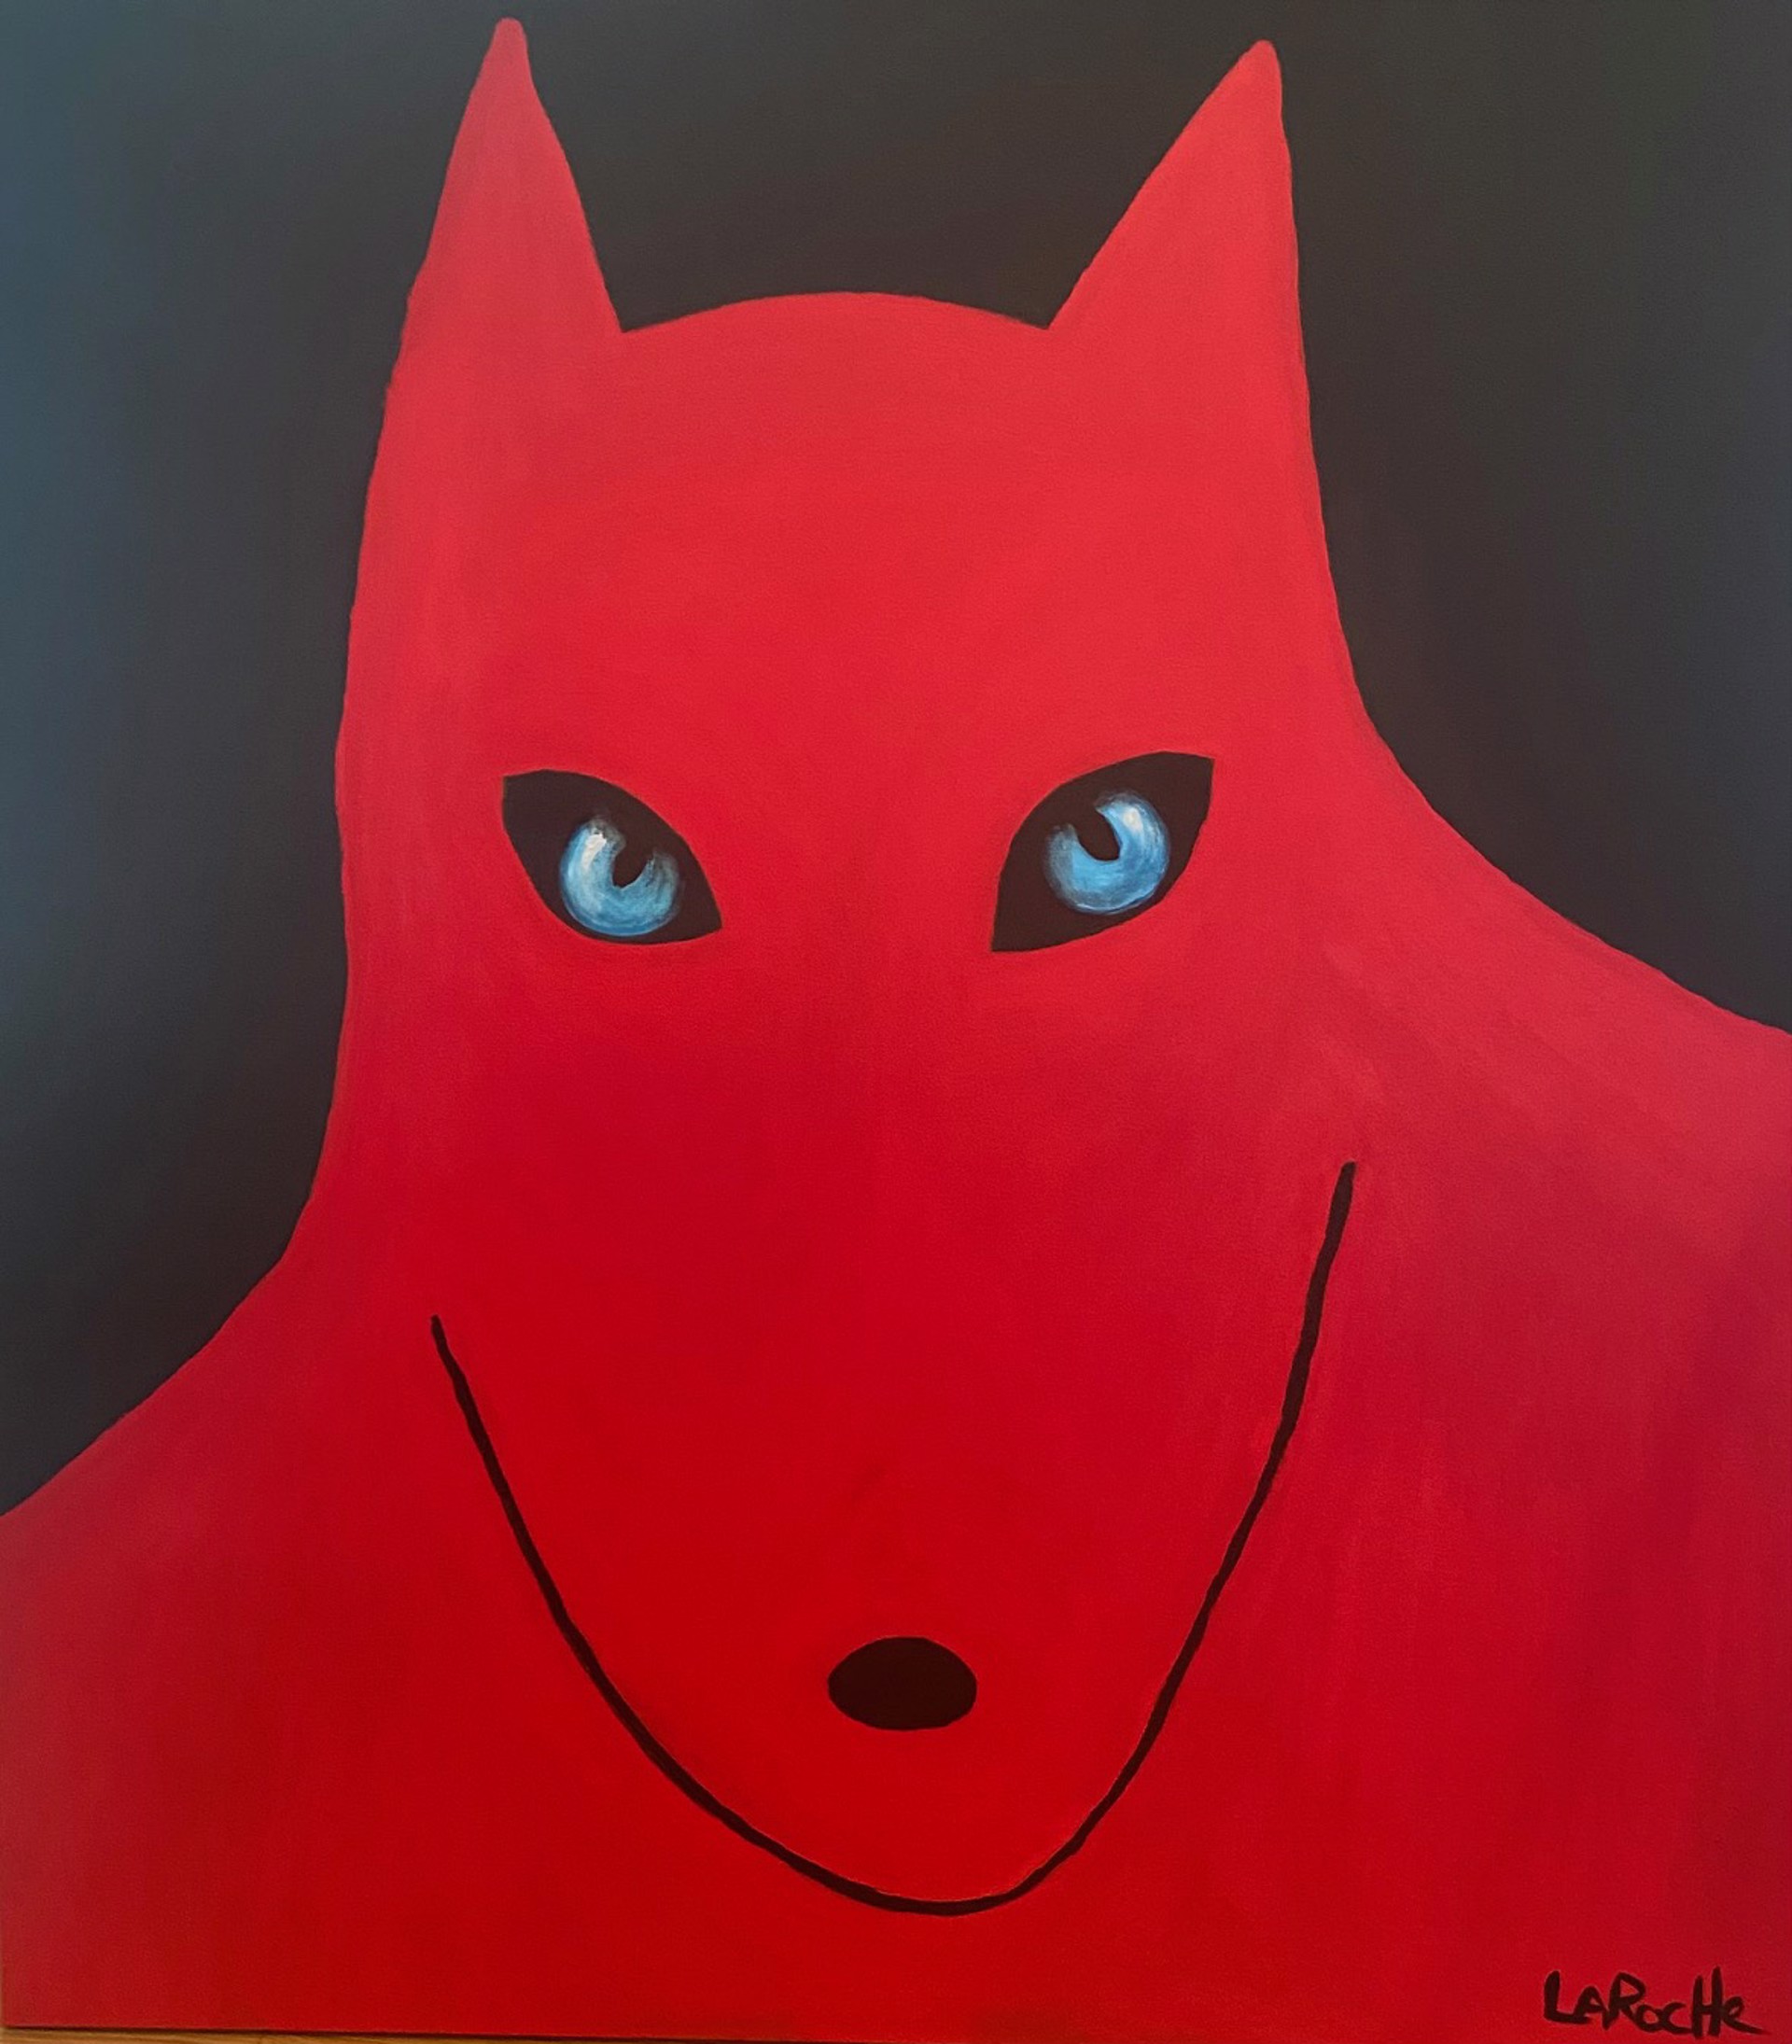 WILD RED WOLF II by Carole LaRoche